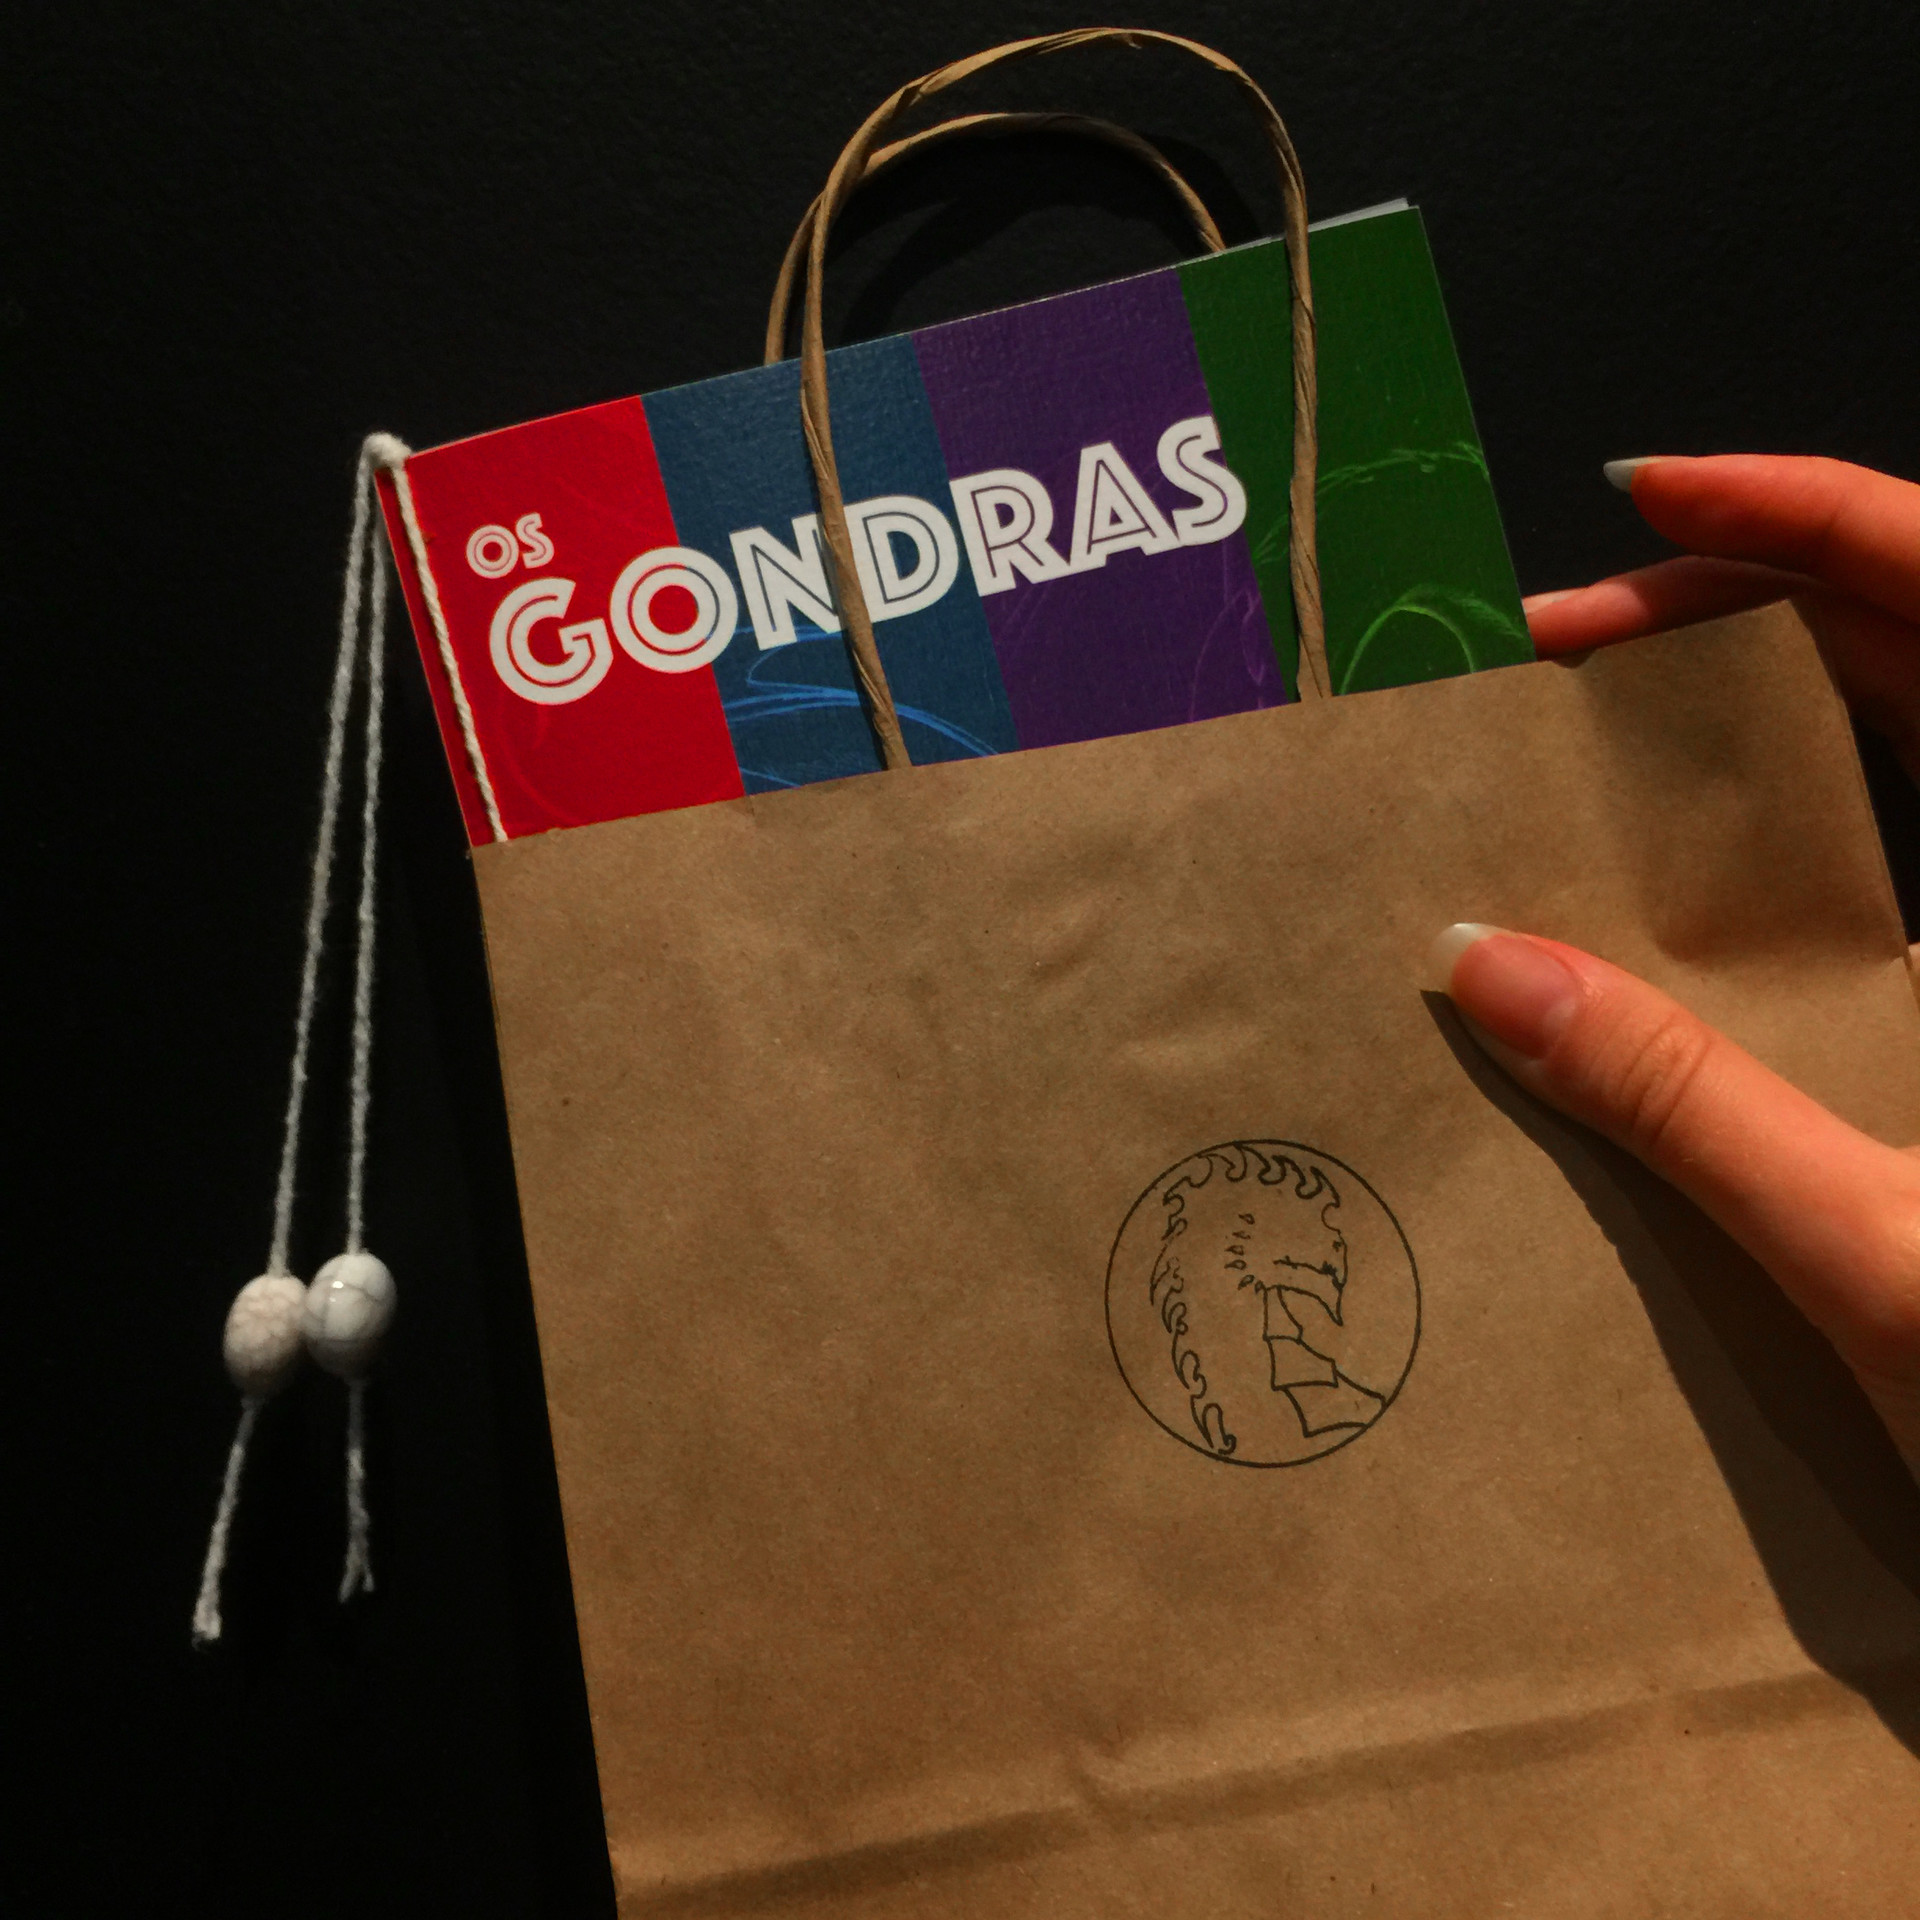 ArtStation - Os Gondras (The Gondras)